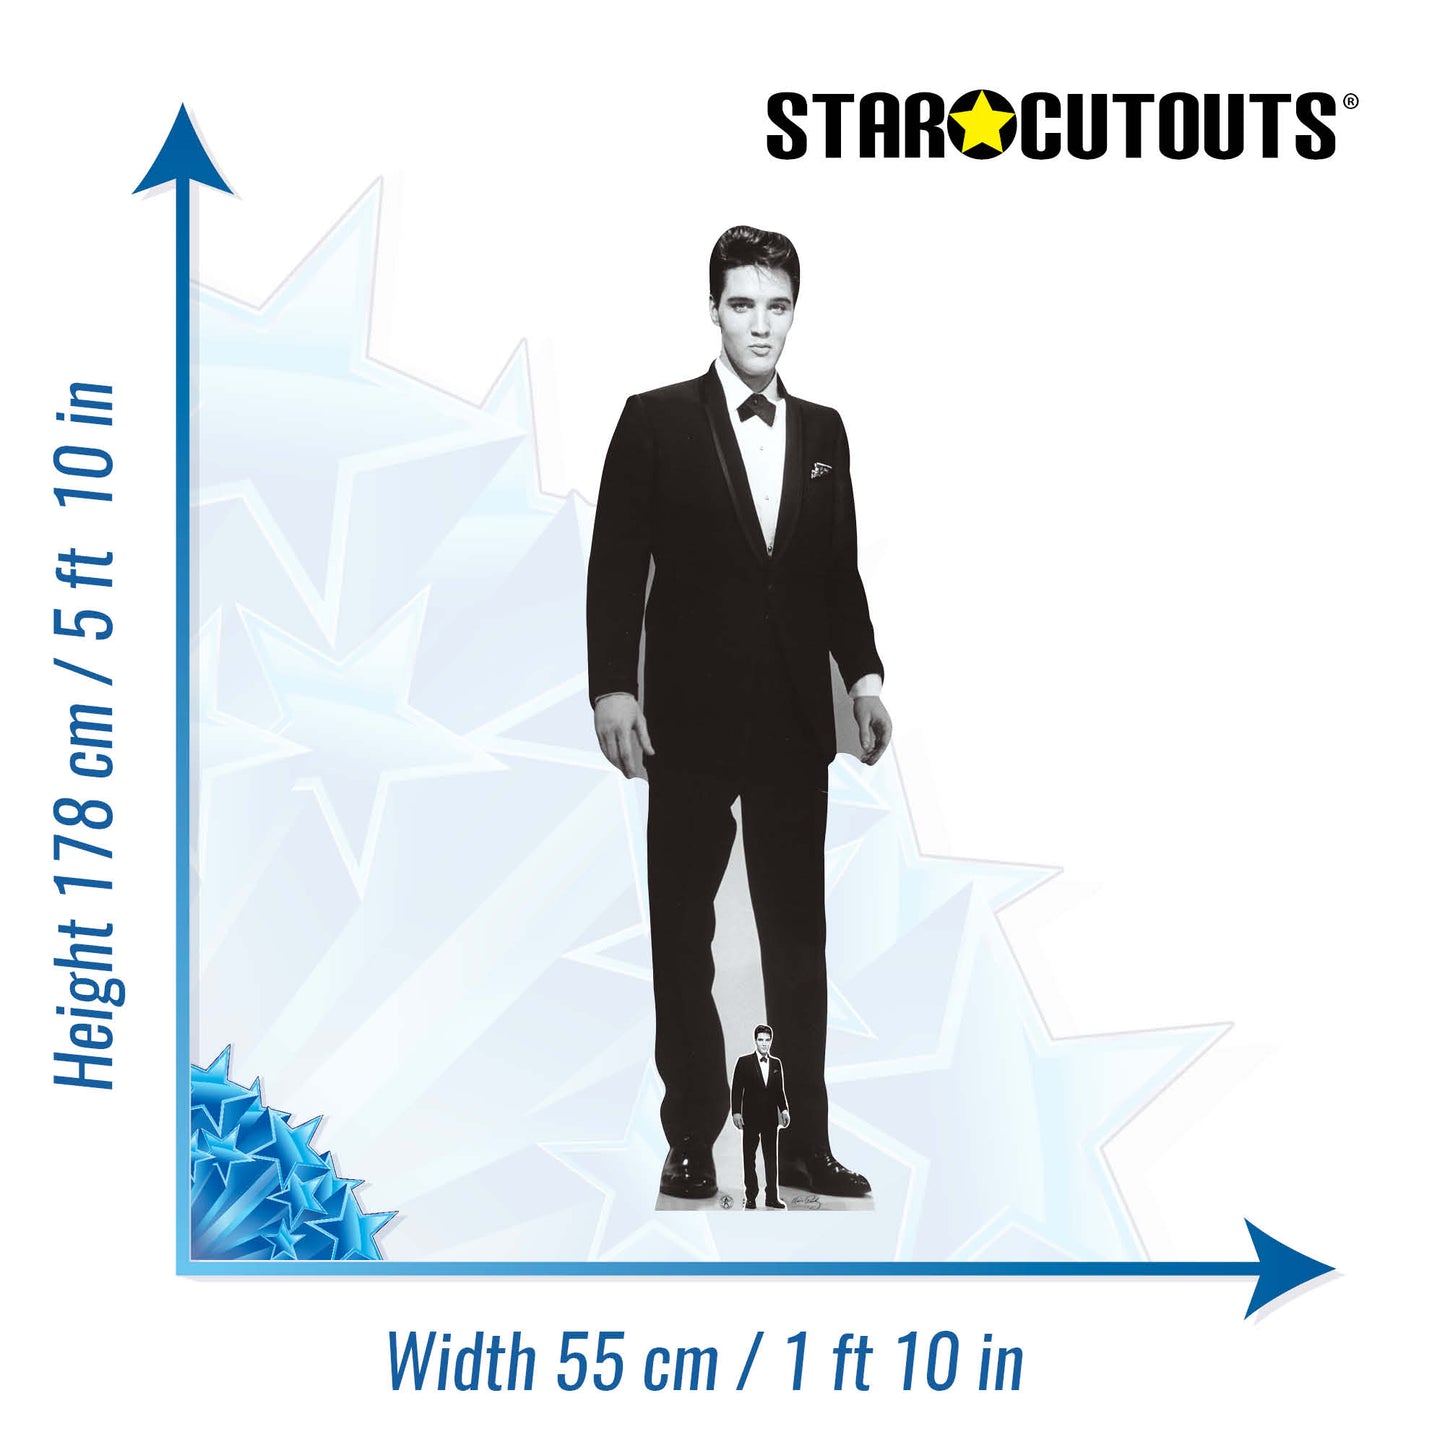 SC576 Elvis Presley Tuxedo Cardboard Cut Out Height 178cm